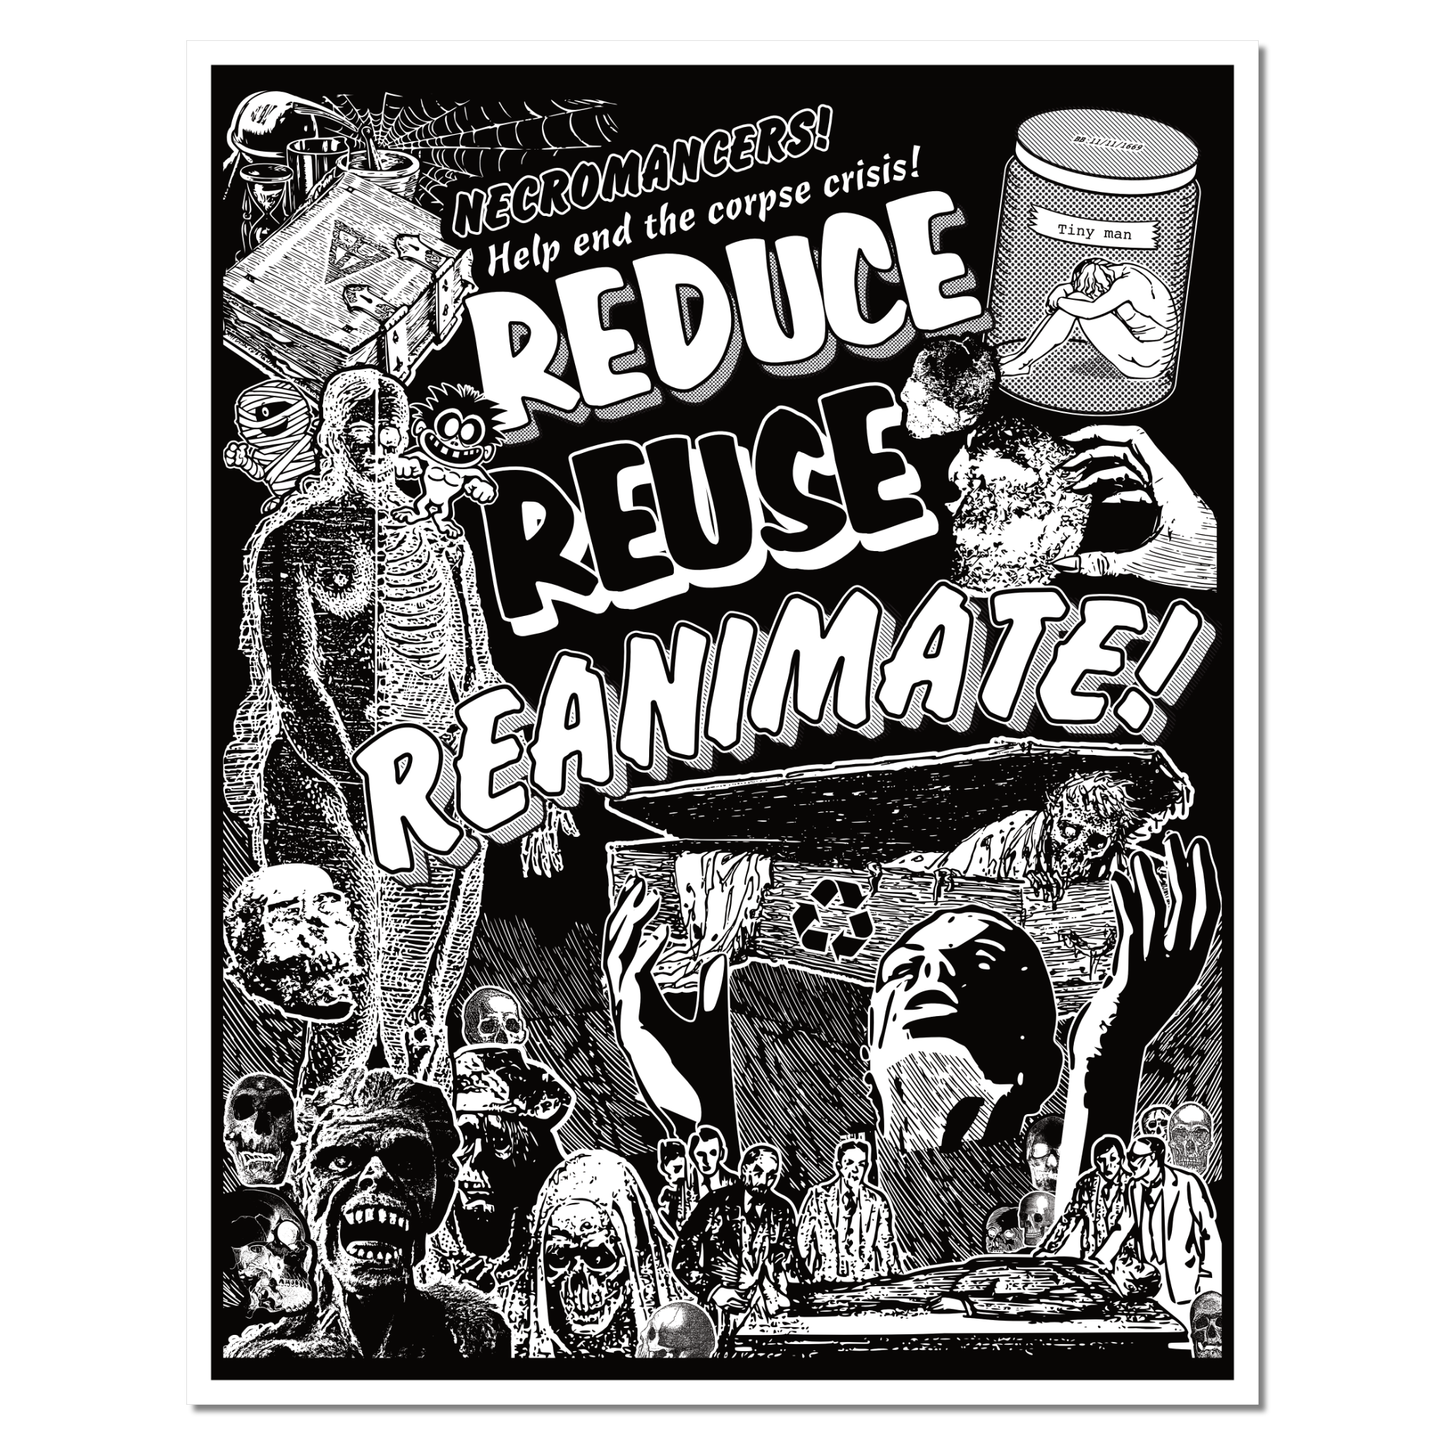 "Reanimate" poster